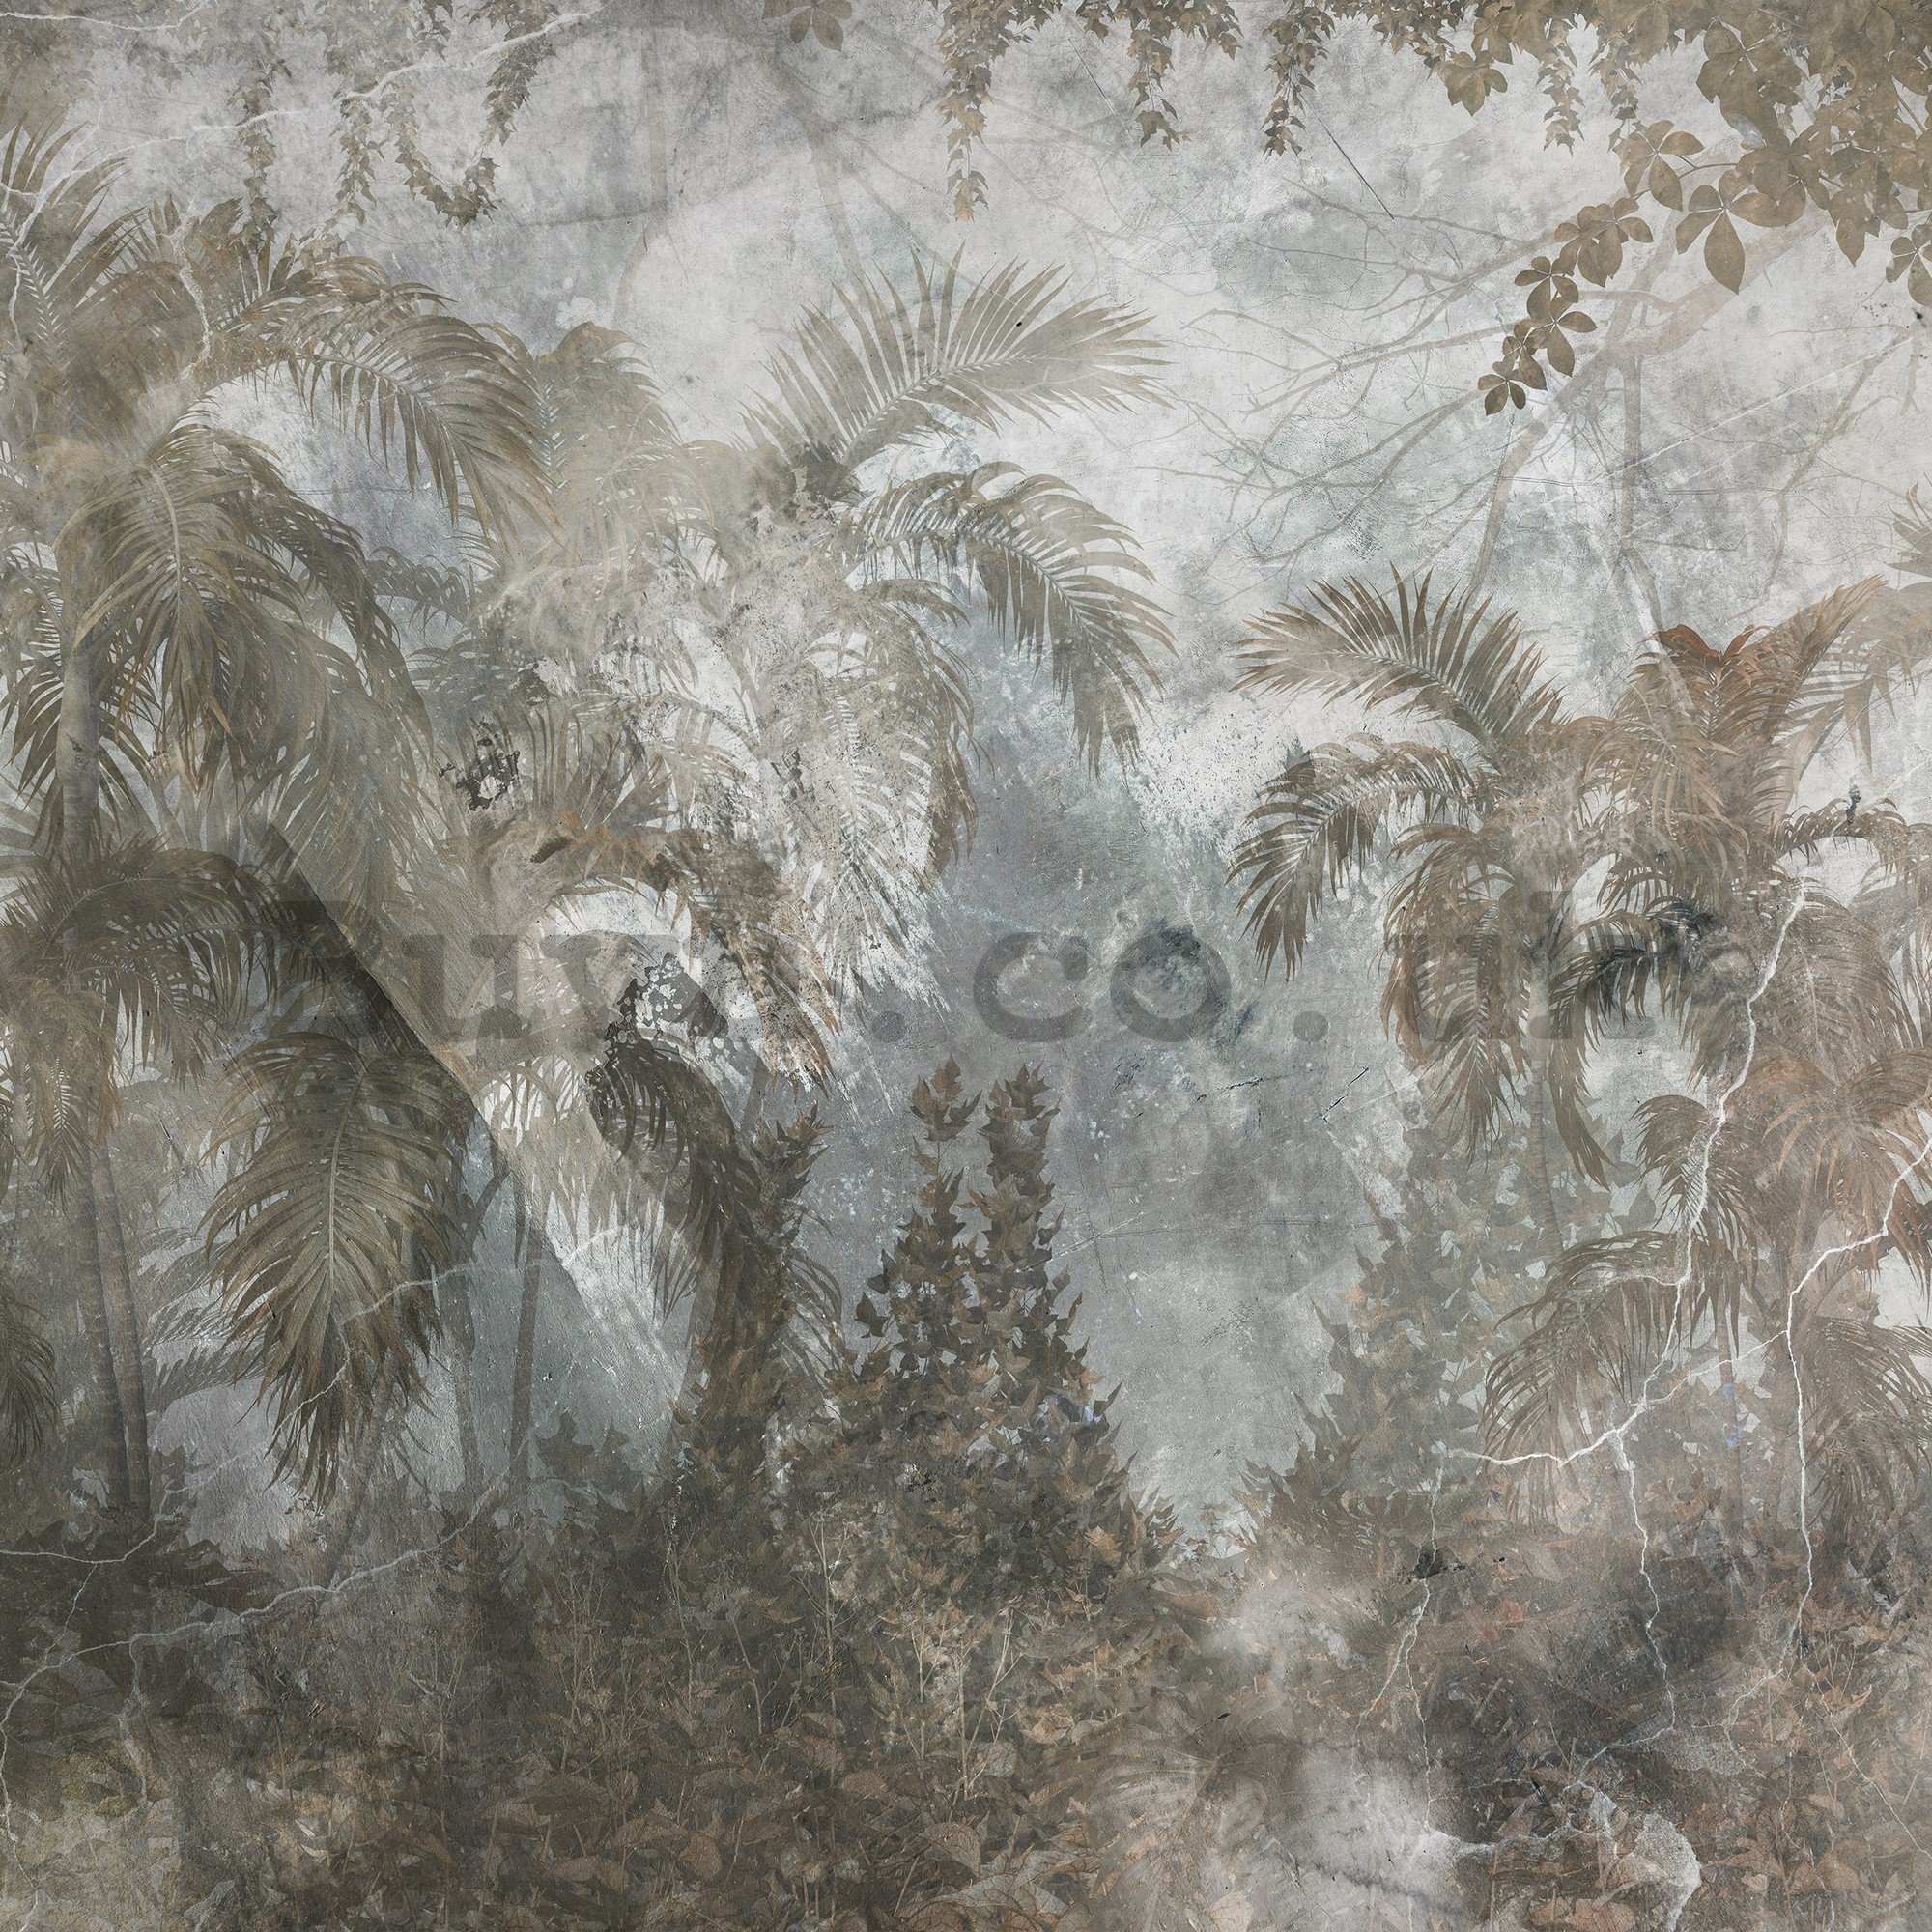 Wall mural vlies: Jungle (concrete imitation) - 368x254 cm